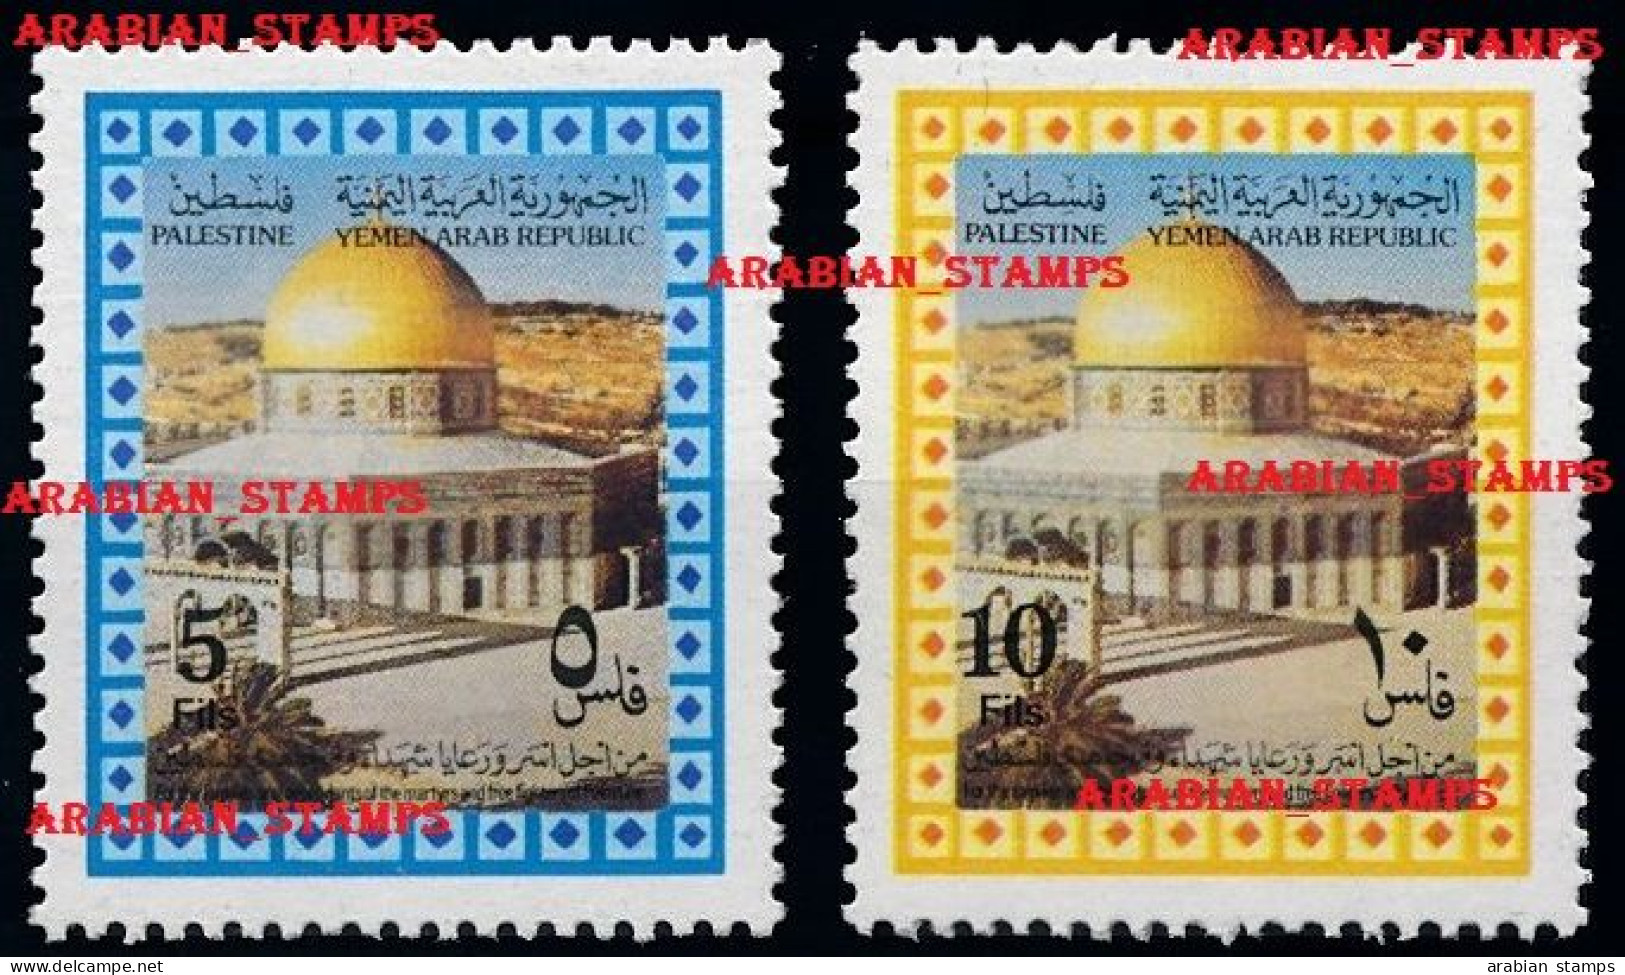 YEMEN ARAB REPUBLIC 1980 PALESTINIAN WELFARE PALESTINE DOME OF THE ROCK JOINT ISSUE - Yémen